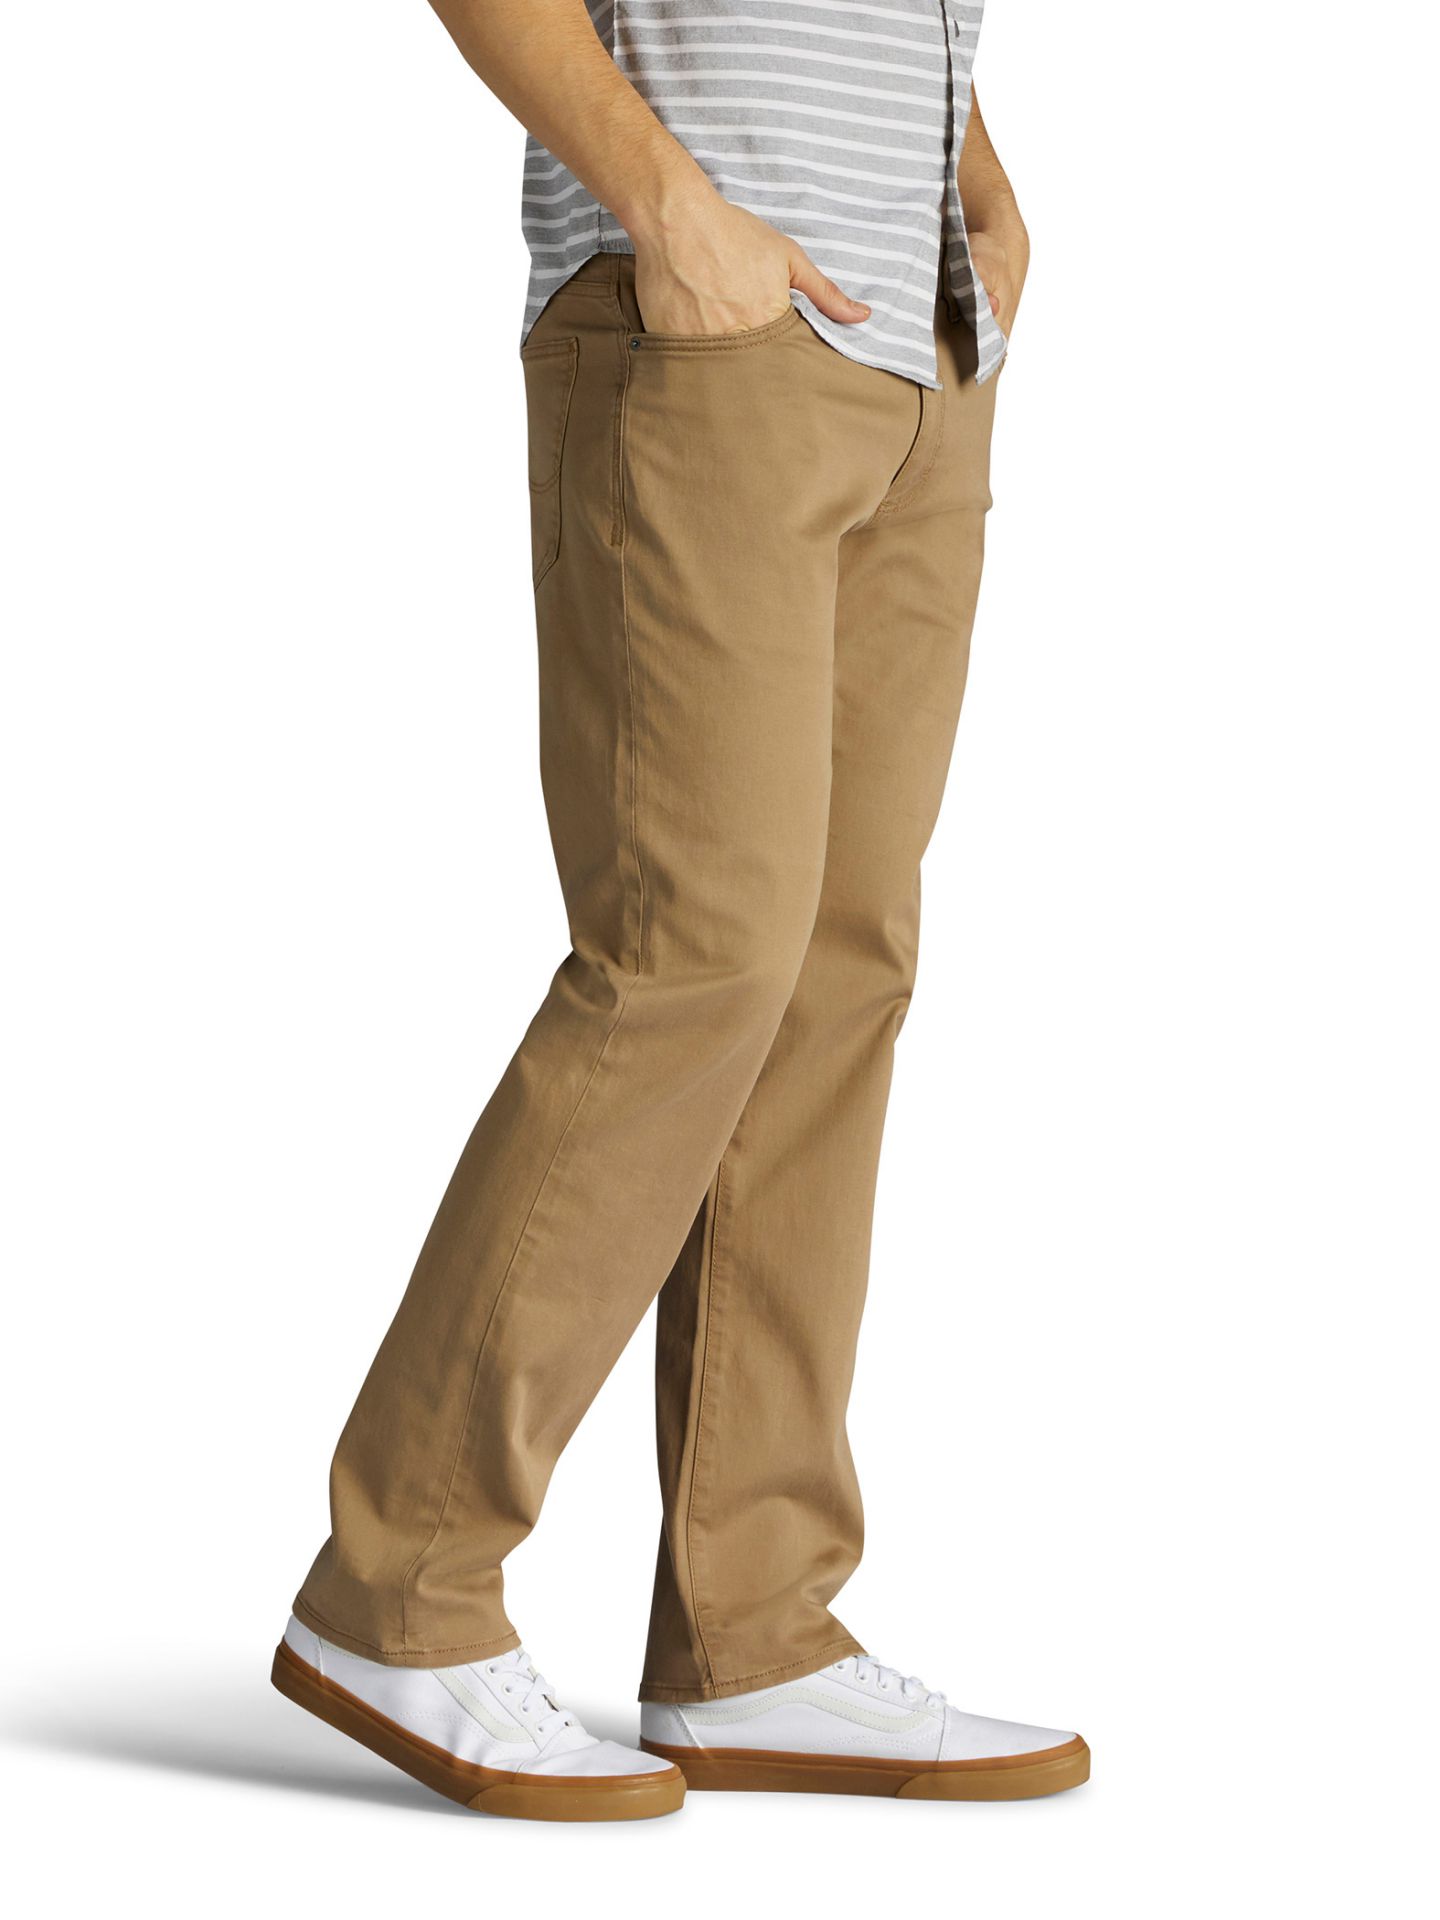 Lee Extreme Motion eBay 5 for Pocket Stretch Cougar Khaki 30x32 Pants | Straight online sale Midrise